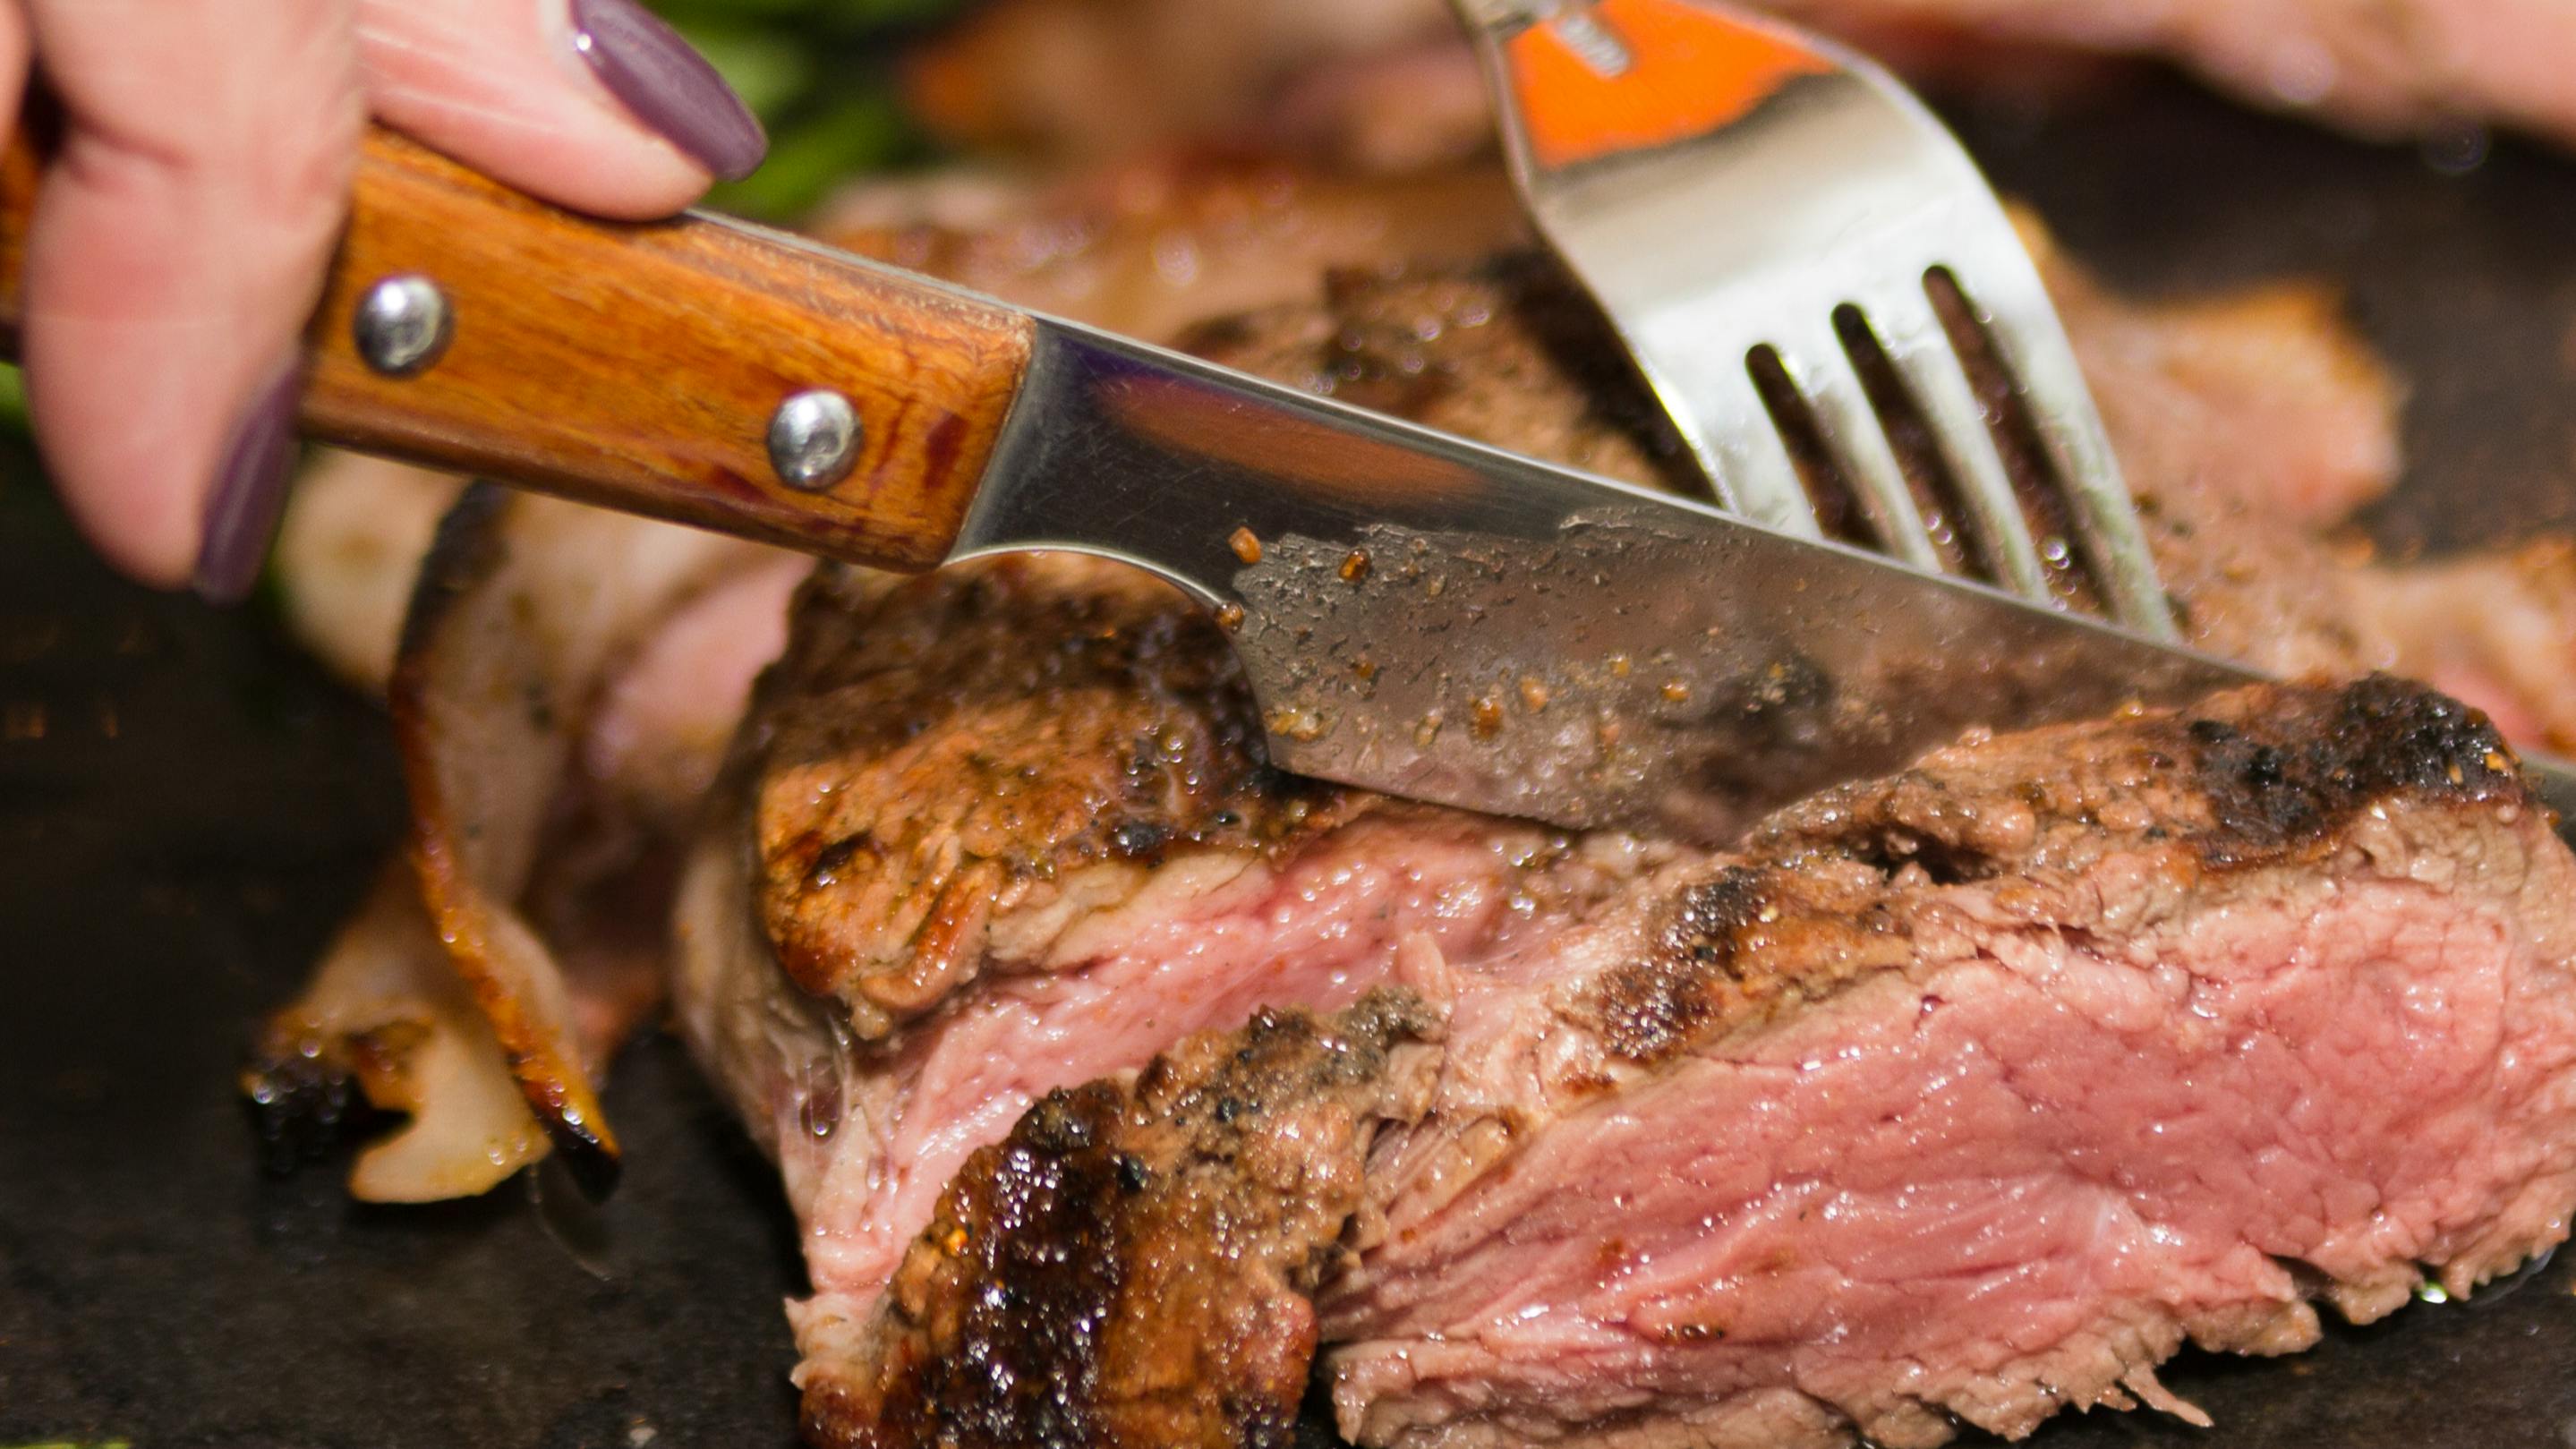 A steak knife slicing through meat.